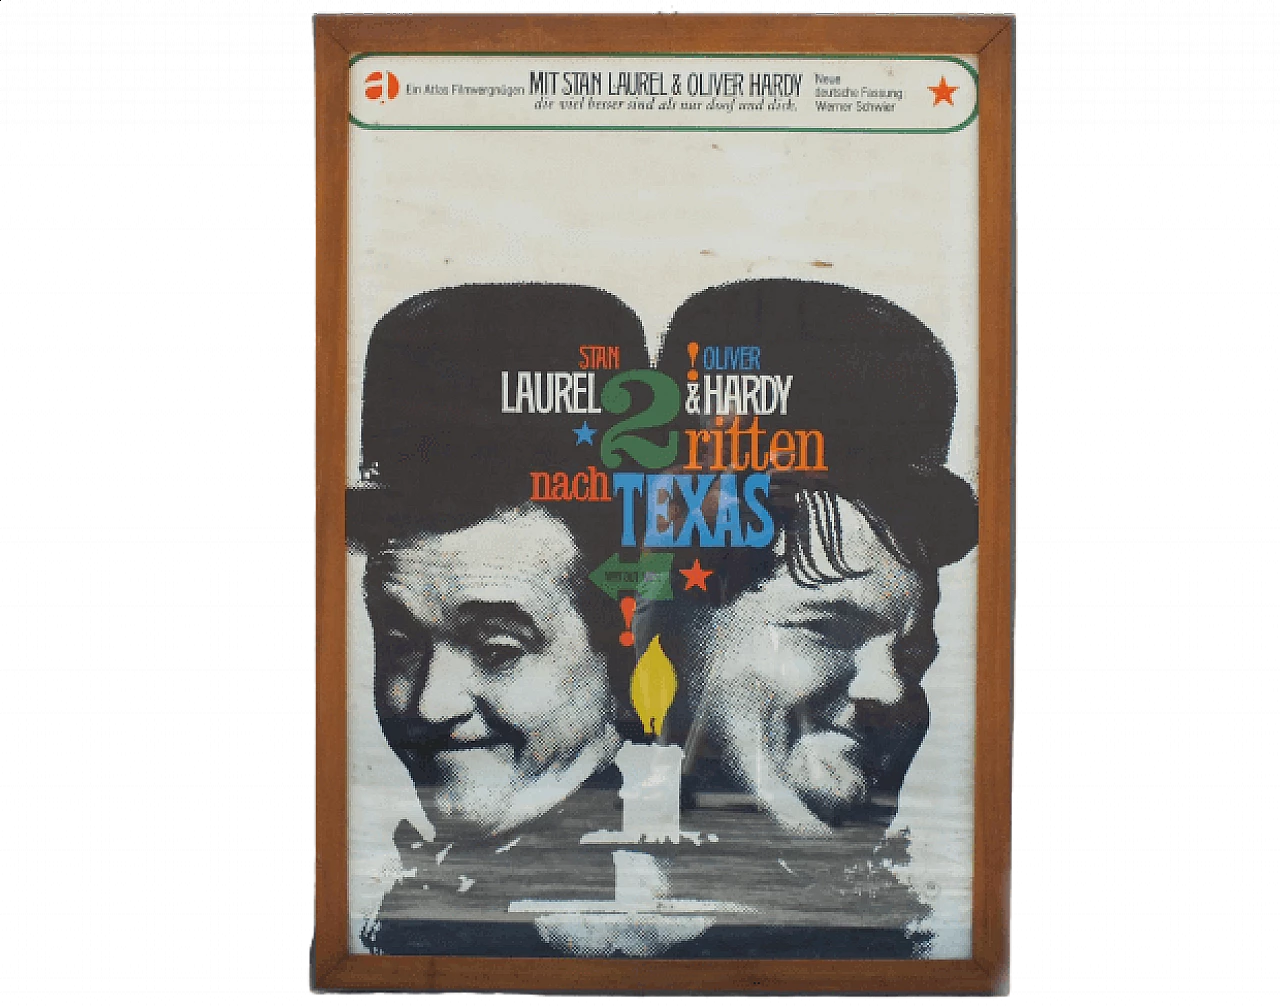 Manifesto cinematografico di Laurel & Hardy - Zwei ritten nach Texas, anni '60 10